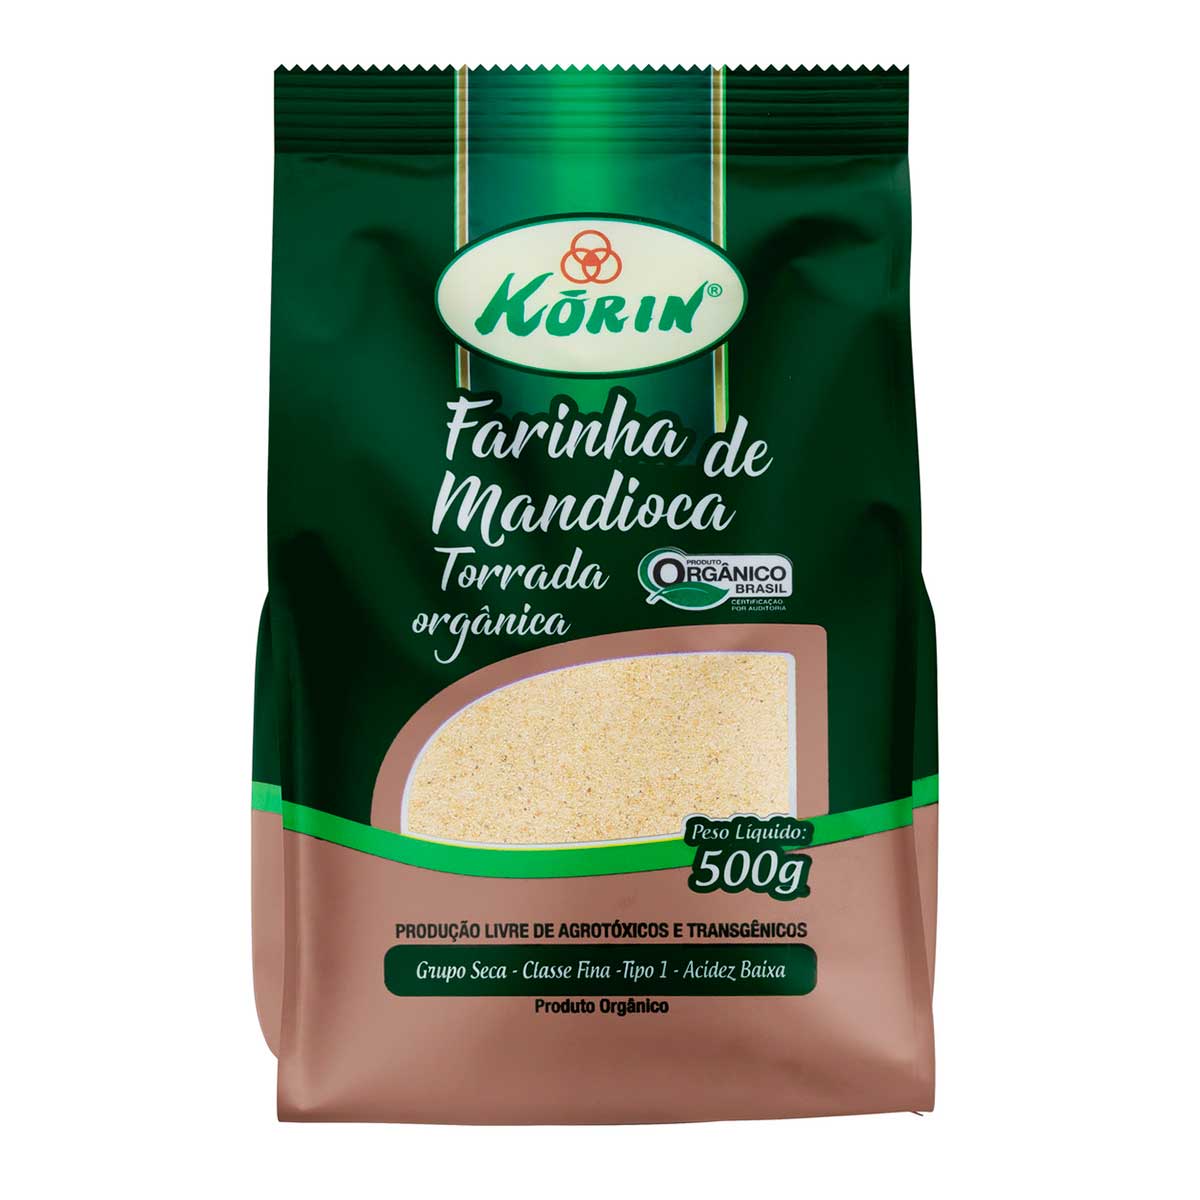 farinha-mandioca-tor-org-korin-500g-1.jpg